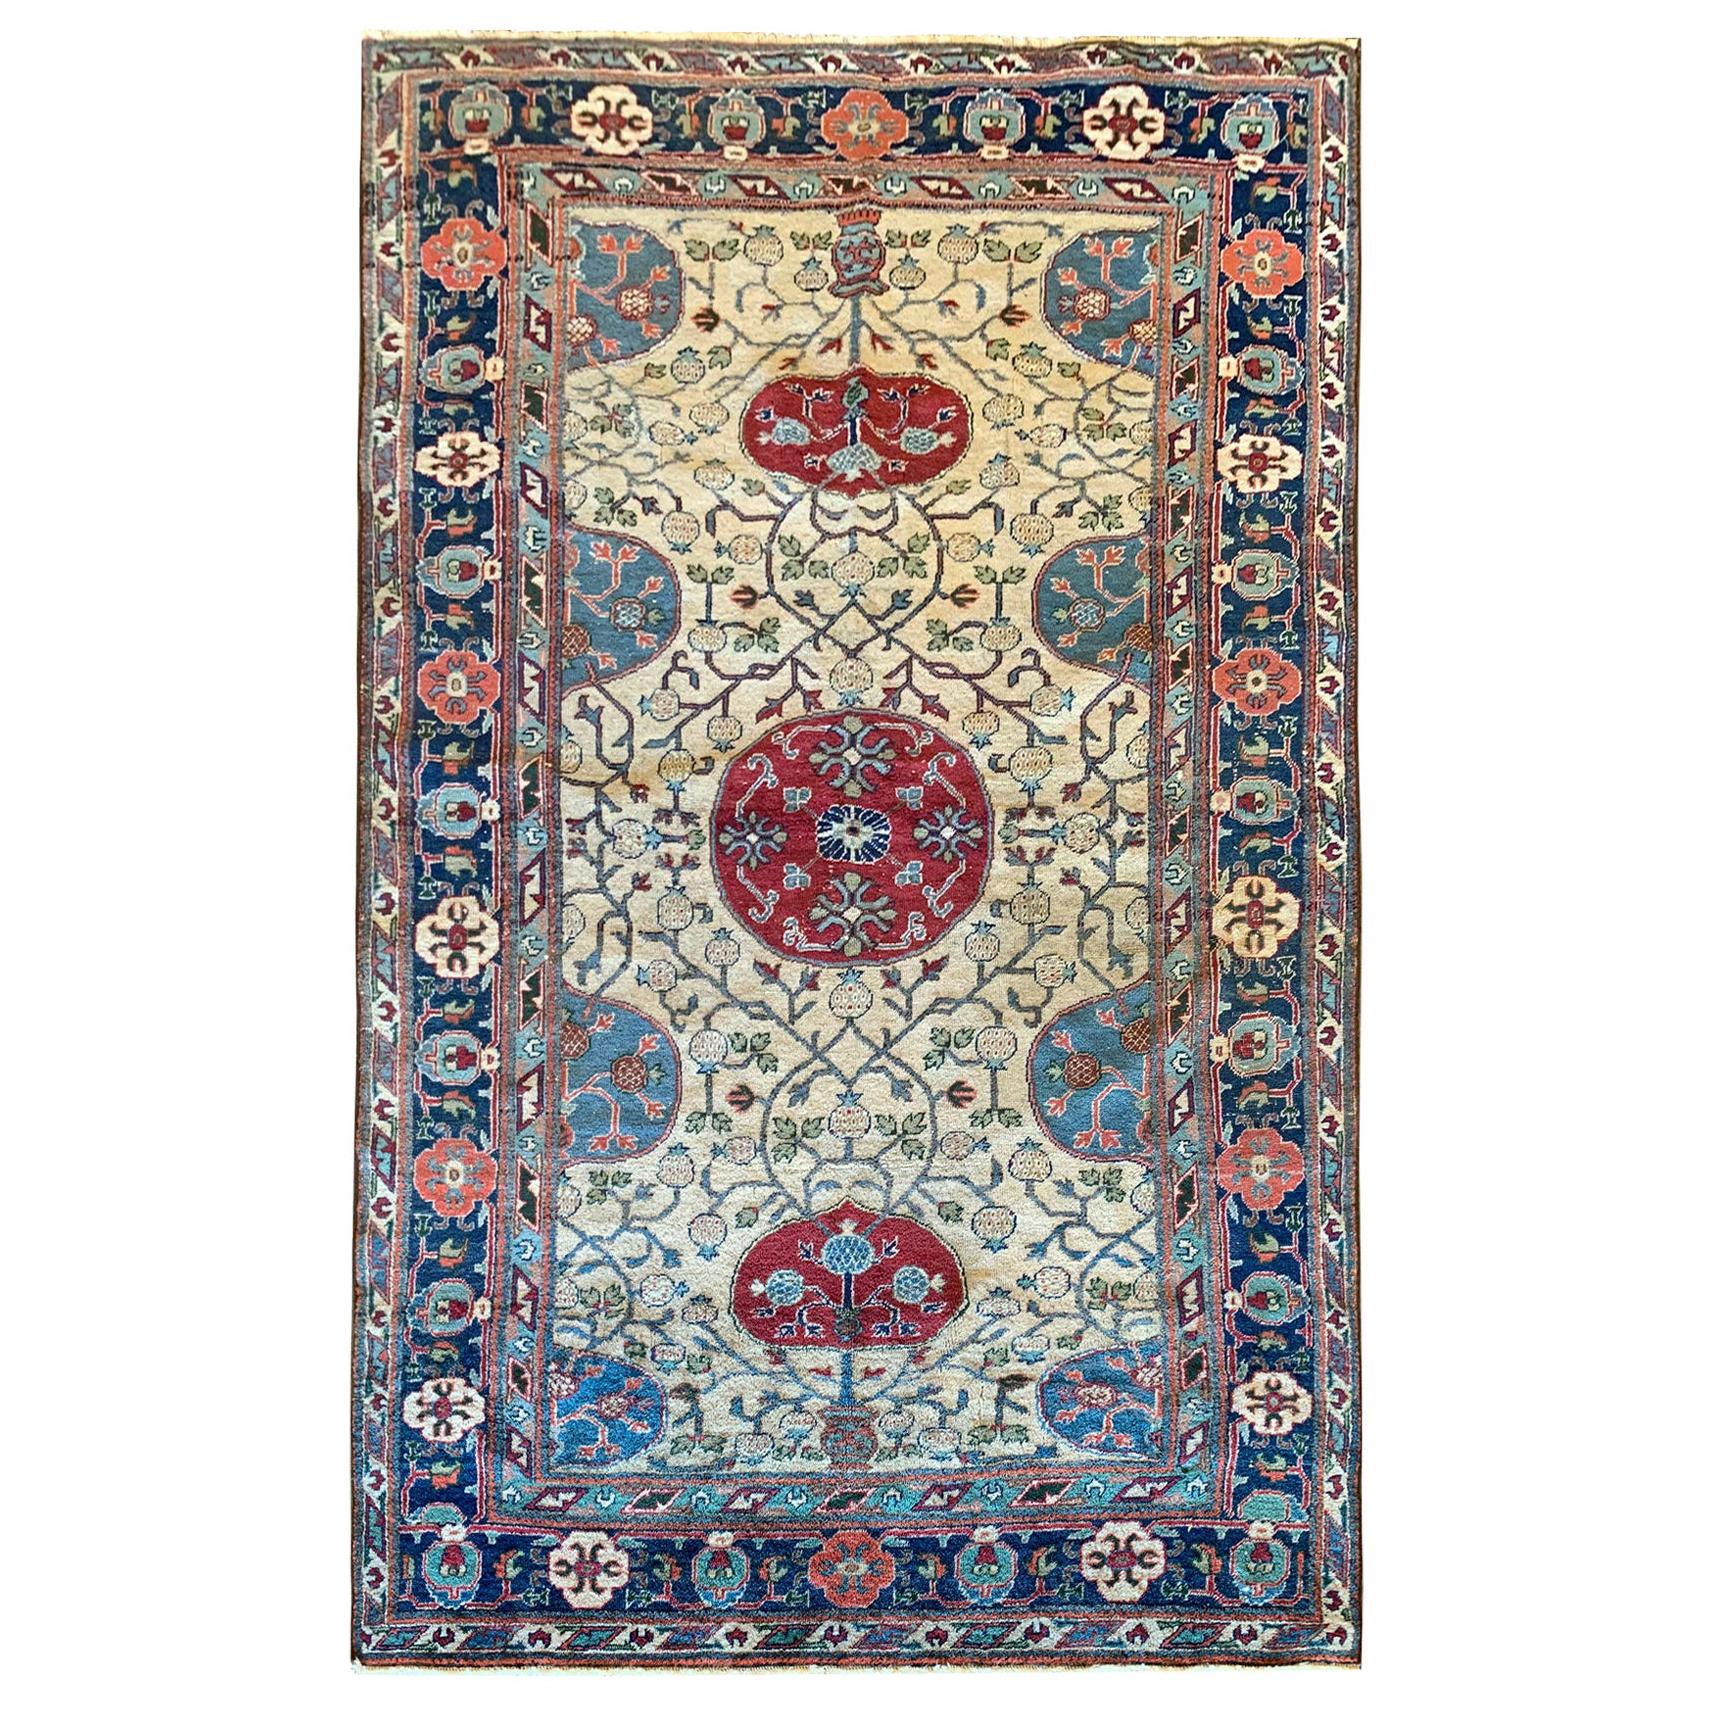 Antique Rugs Central Asian Khotan Carpet Handmade Oriental Area Rug For Sale